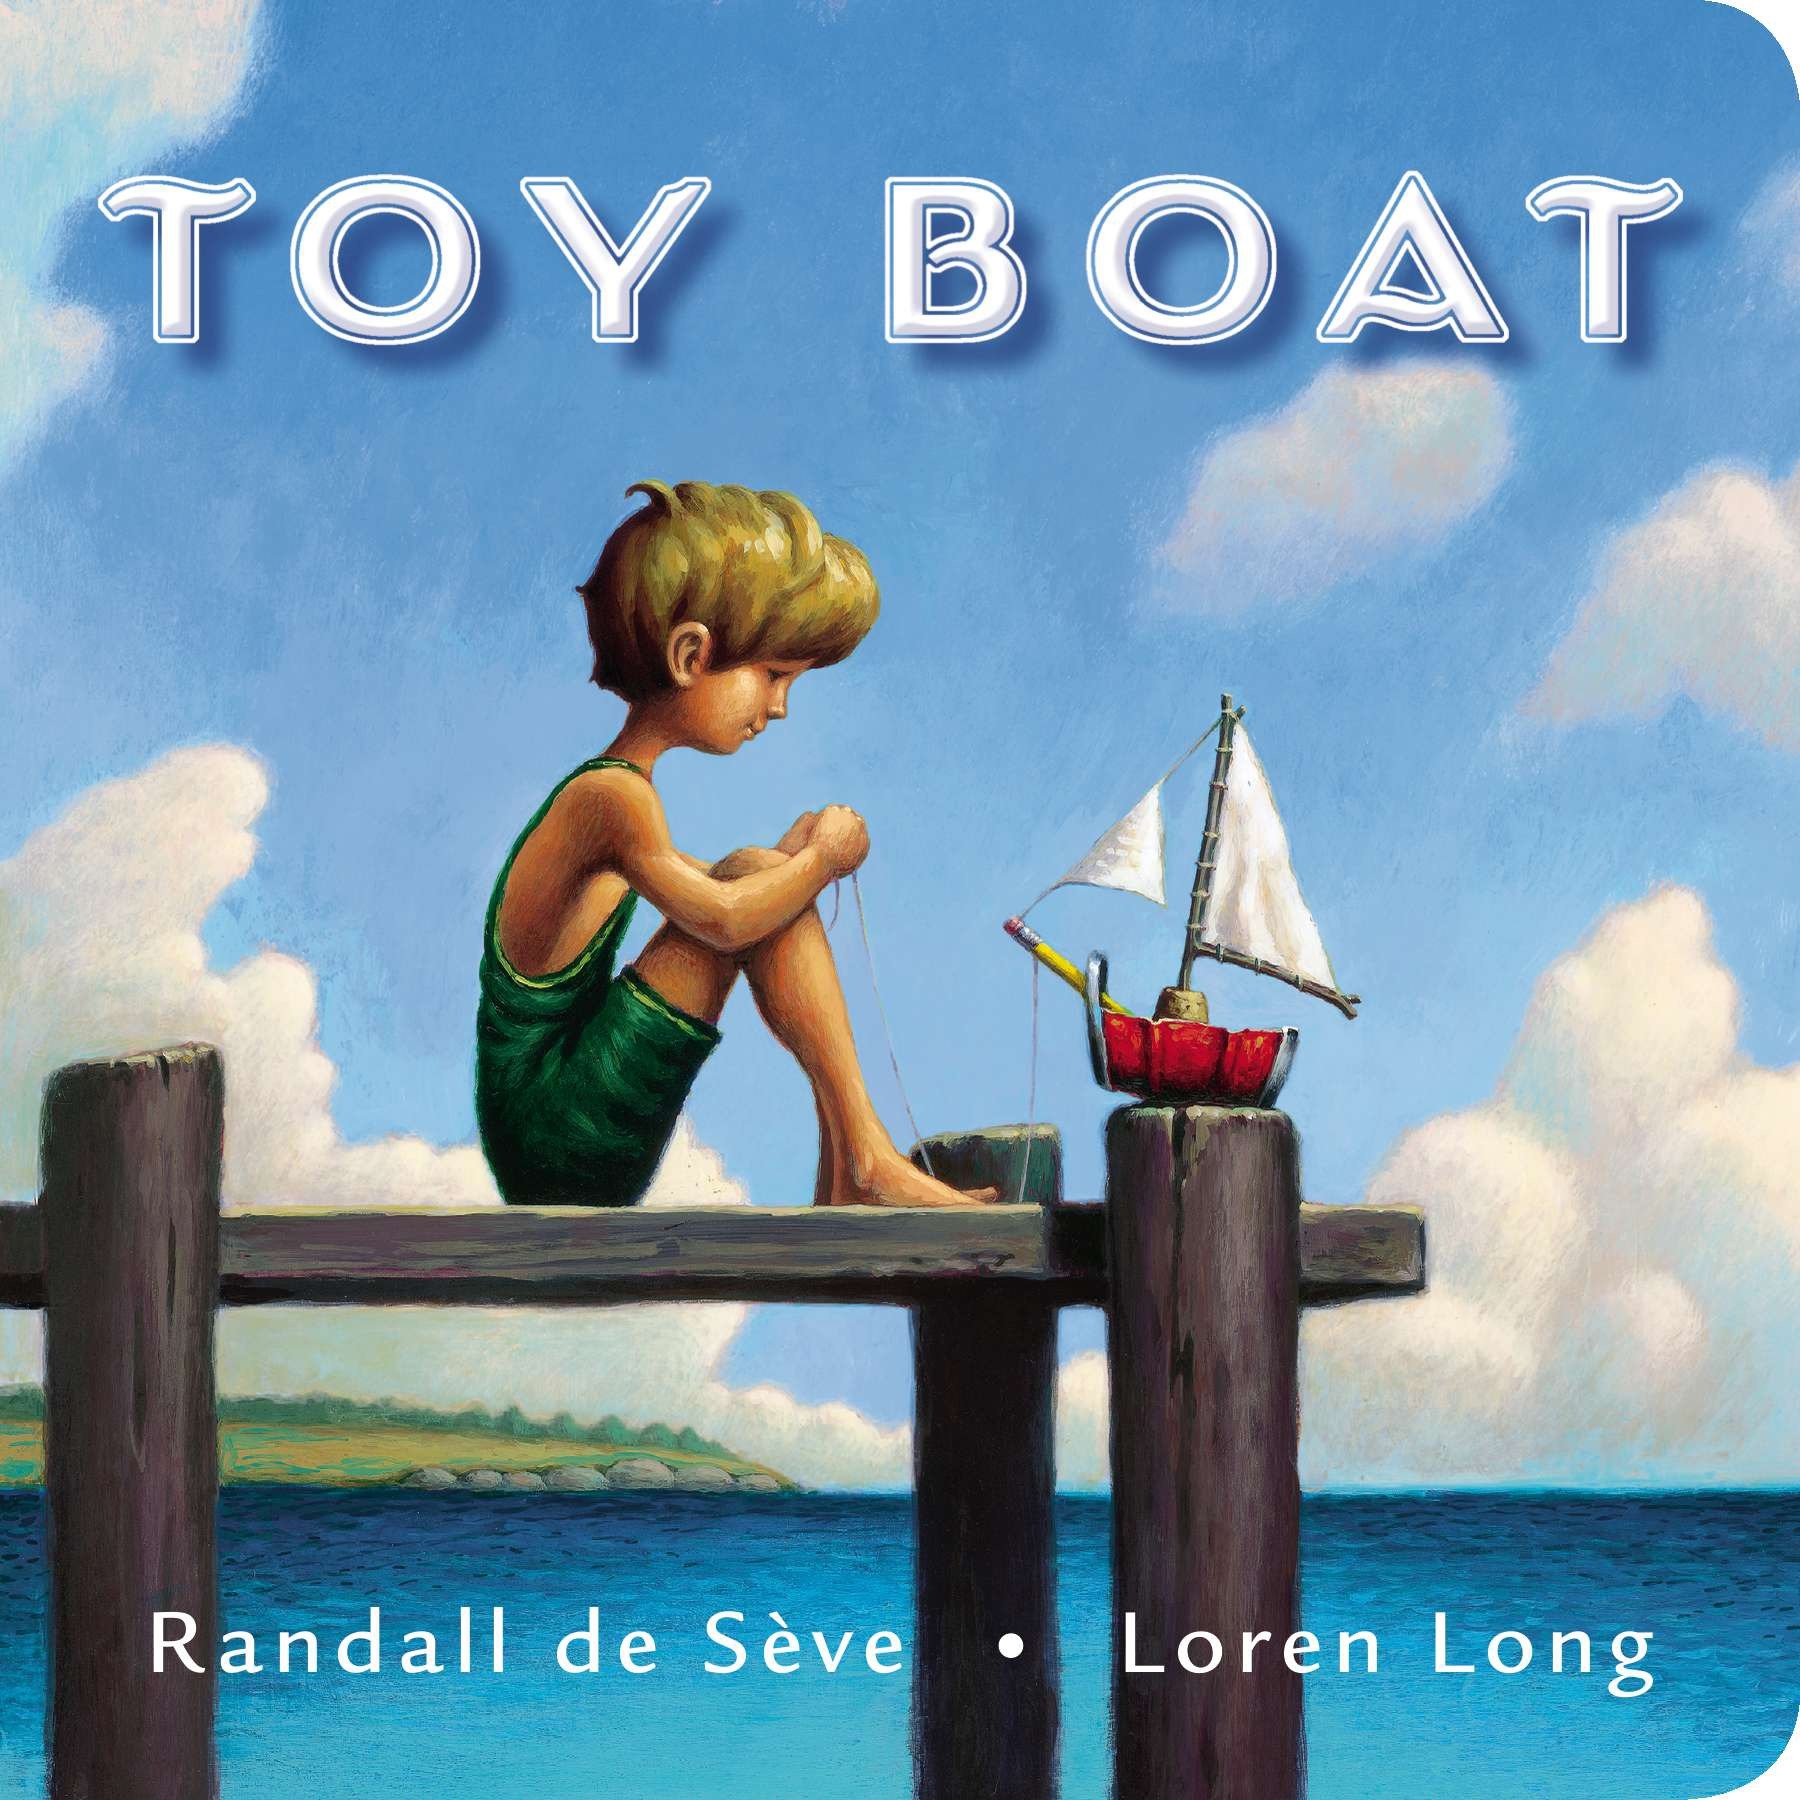 The boat story. Randall de Seve. Seve.